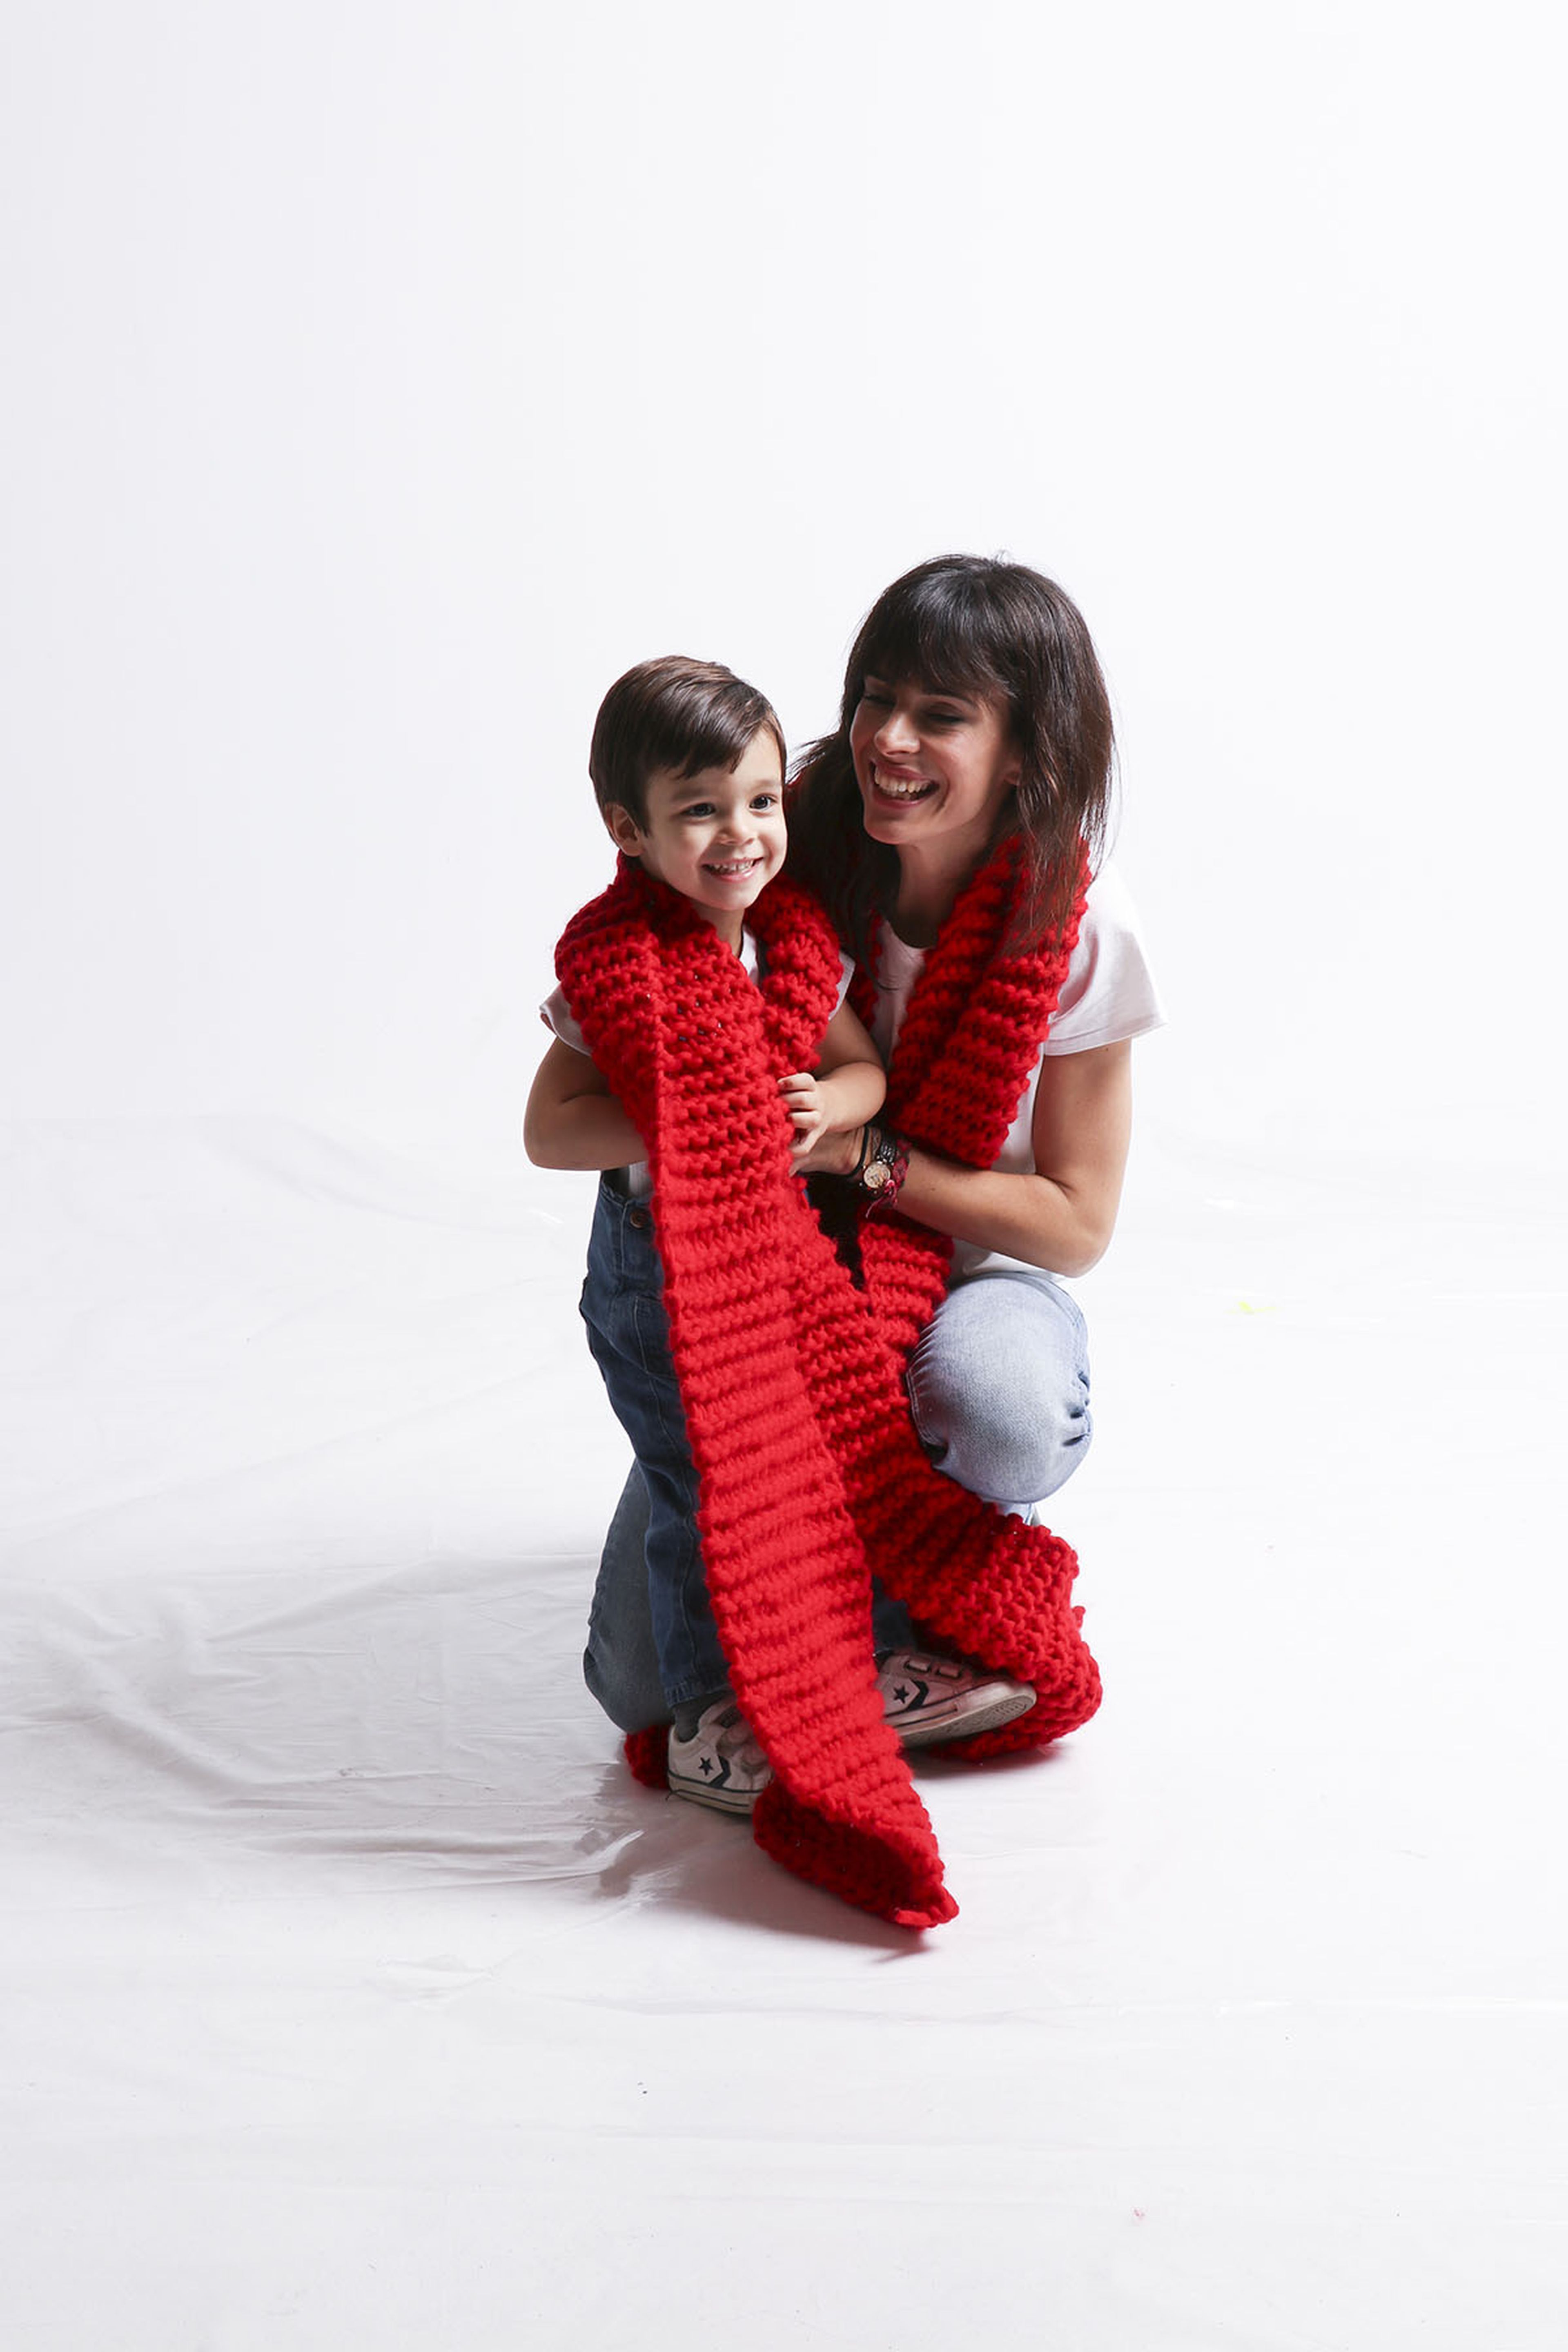 Pepita Marín, fundadora de We Are Knitters